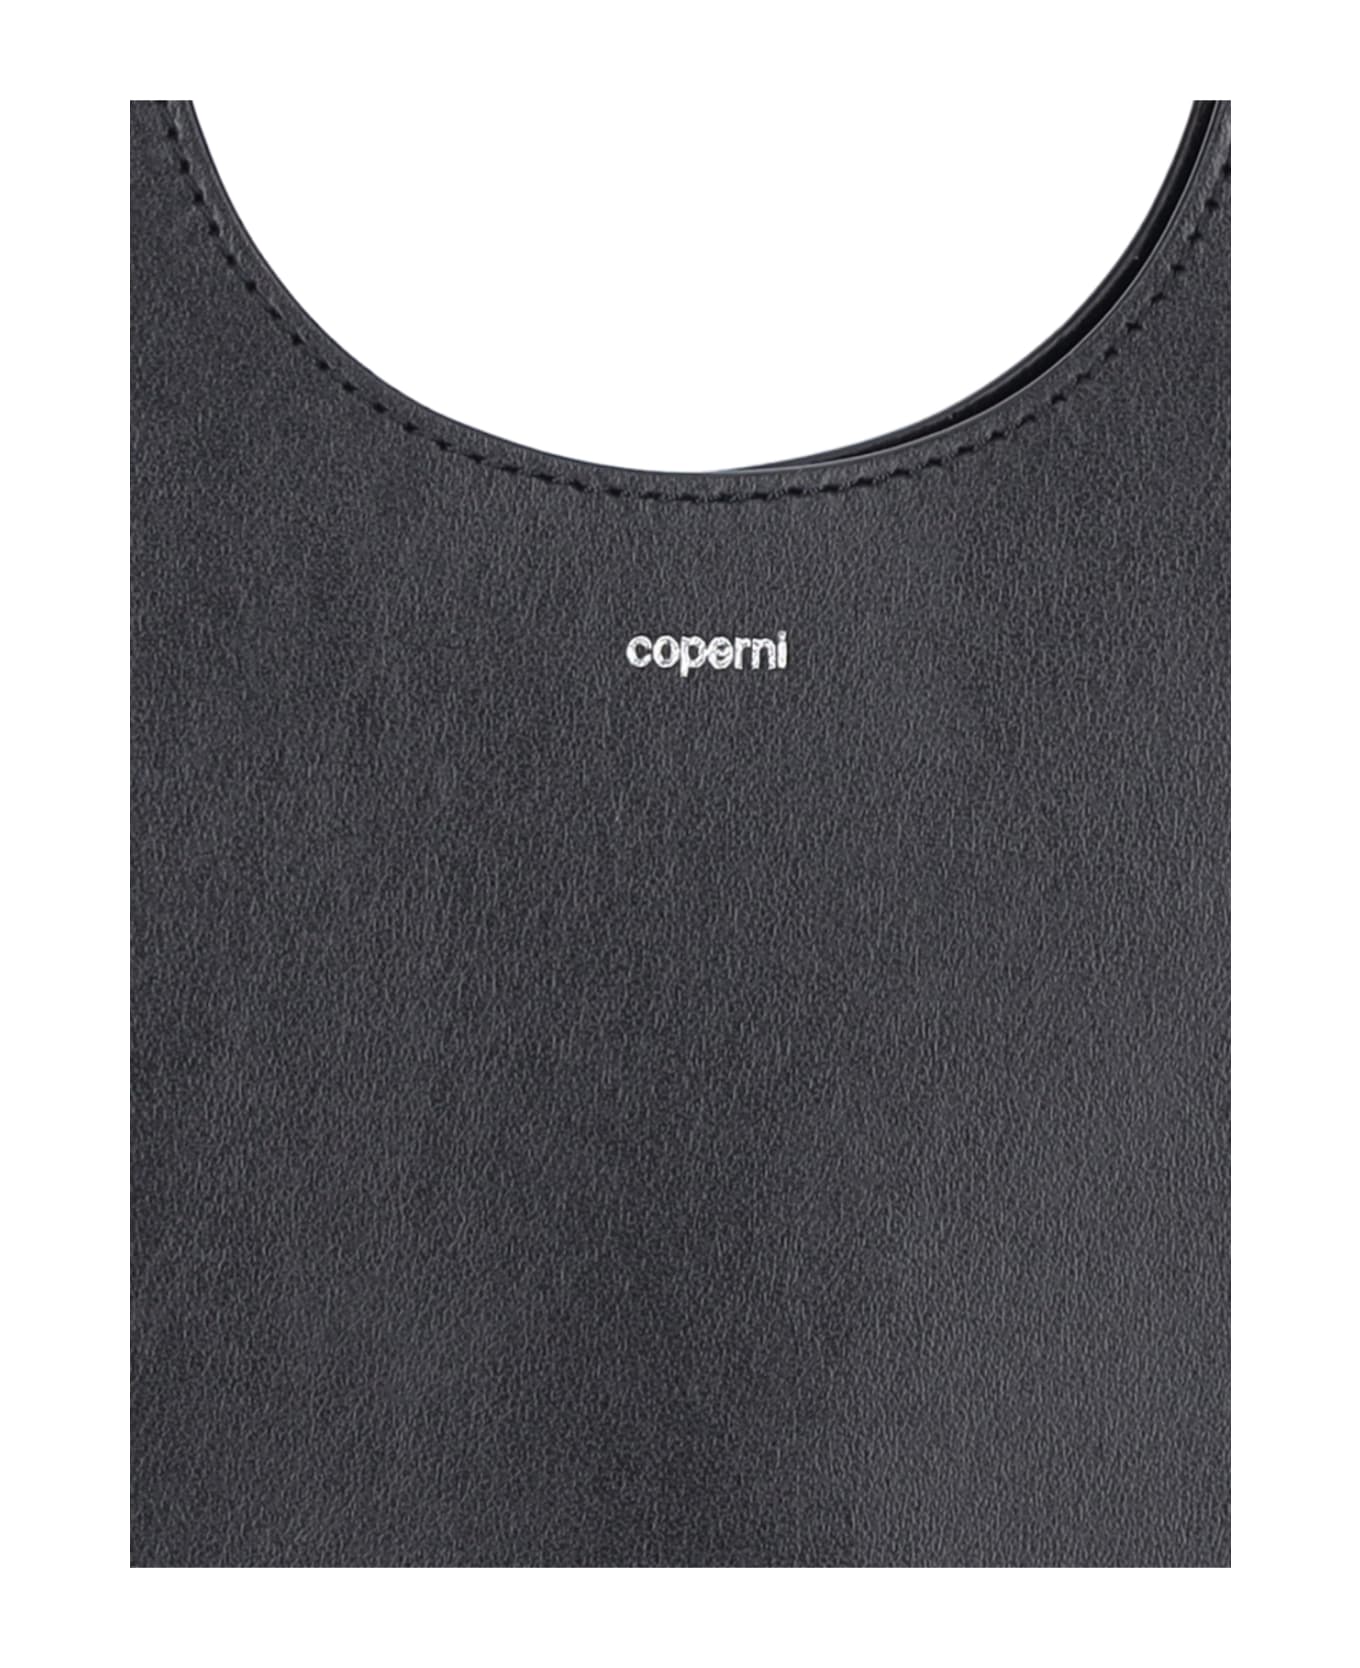 Coperni Micro Bag "swipe" - Black  